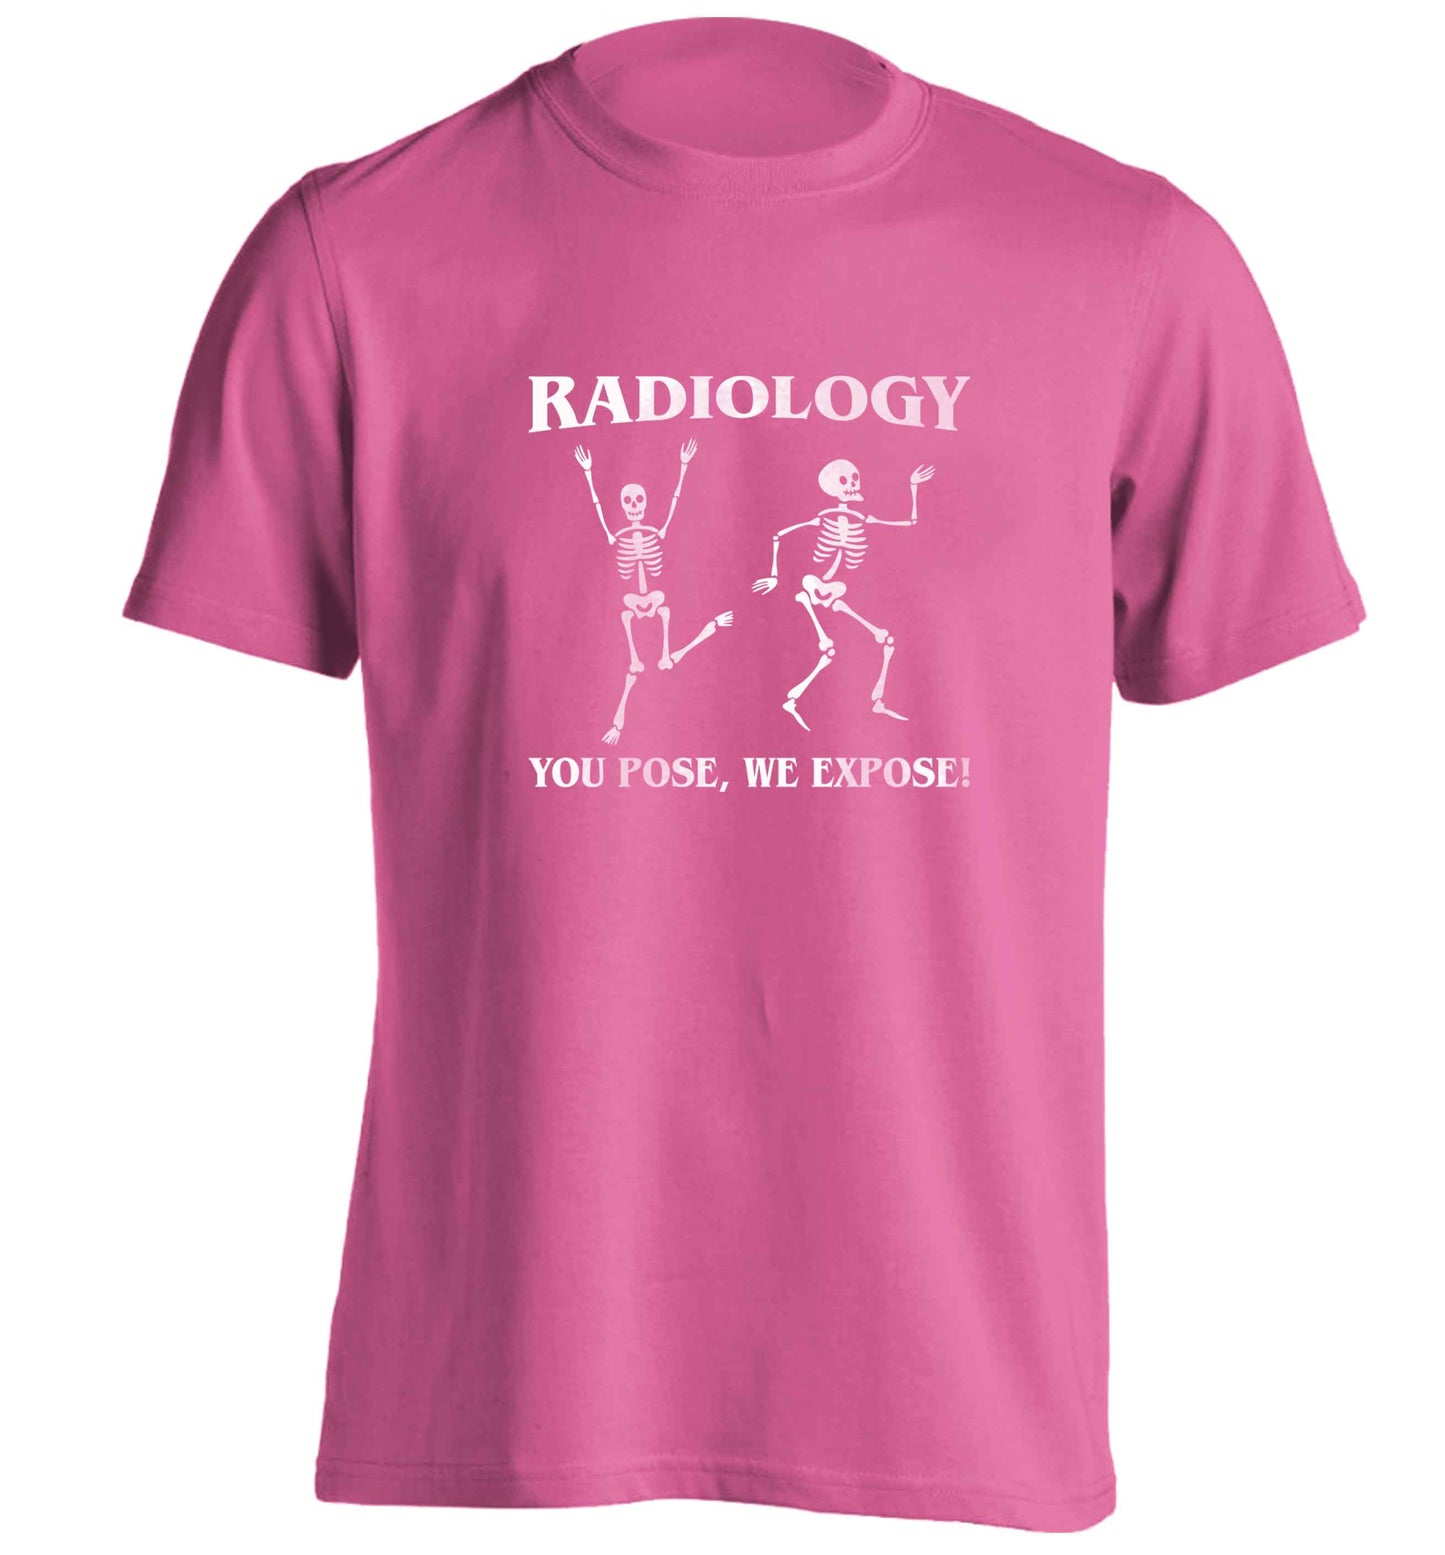 Radiology you pose we expose adults unisex pink Tshirt 2XL